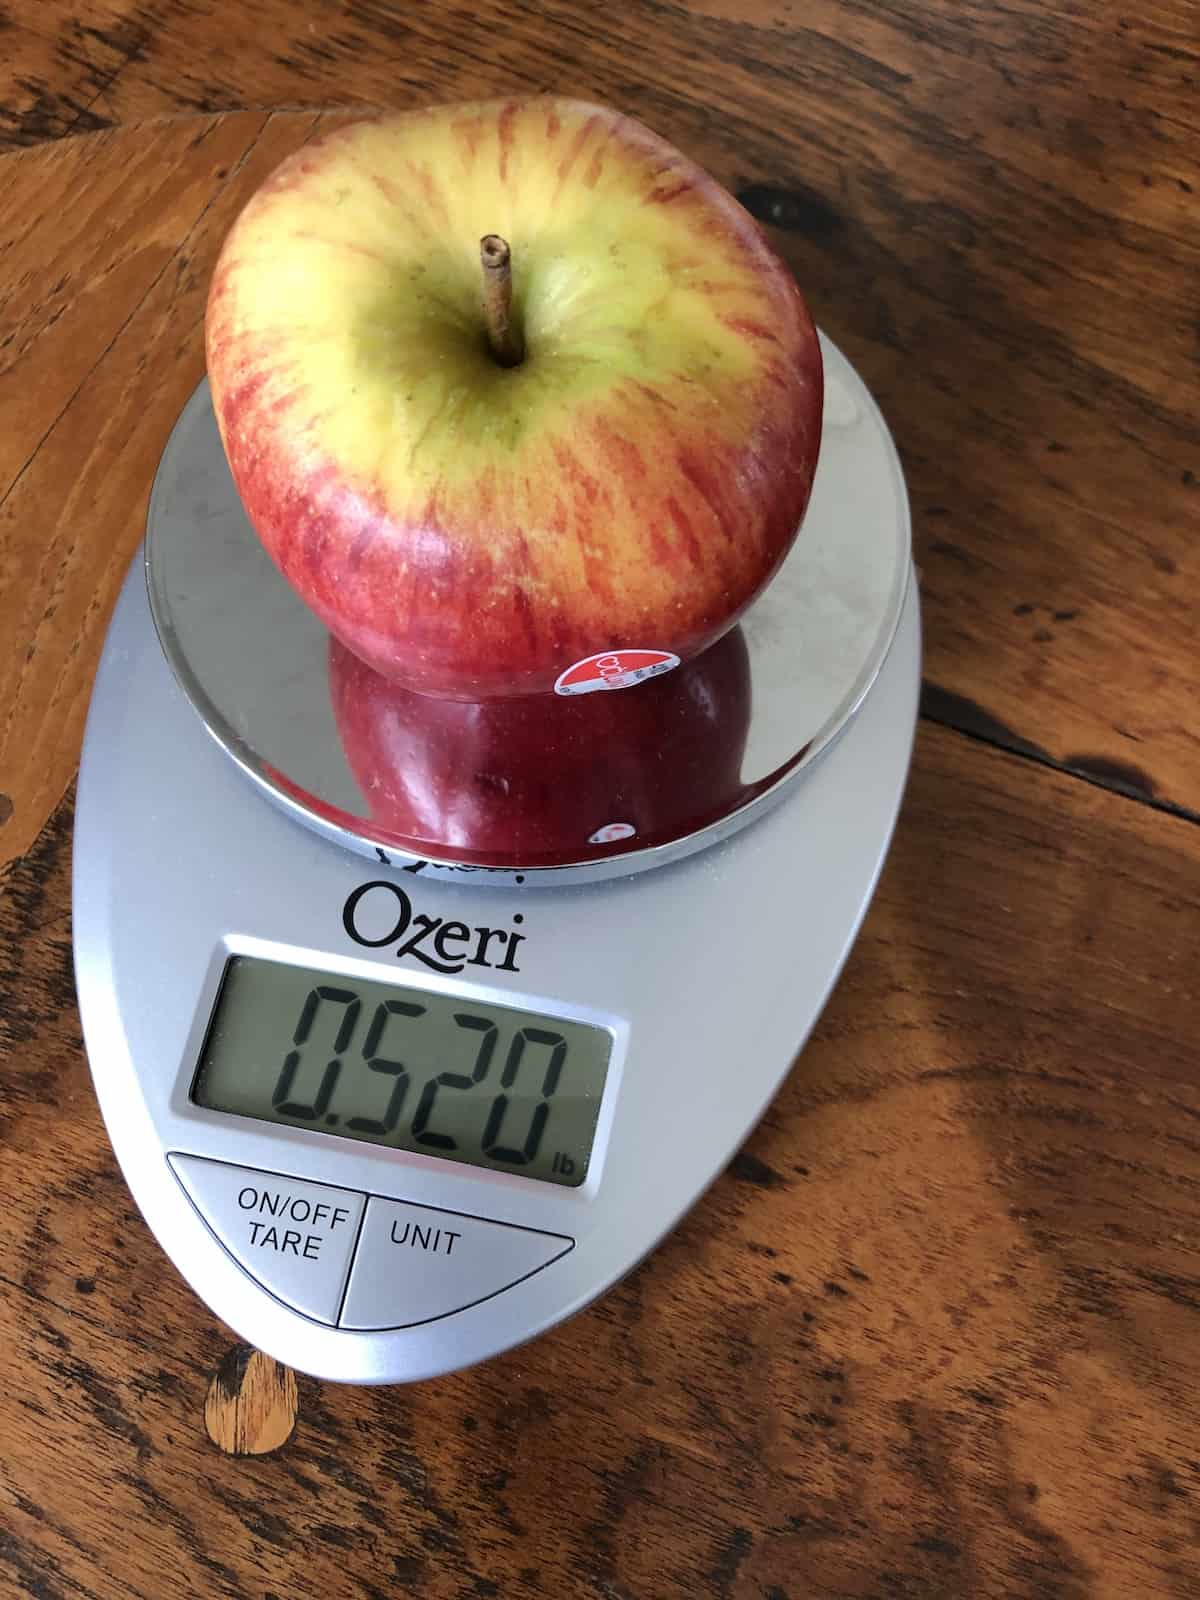 Weight of one braeburn apple